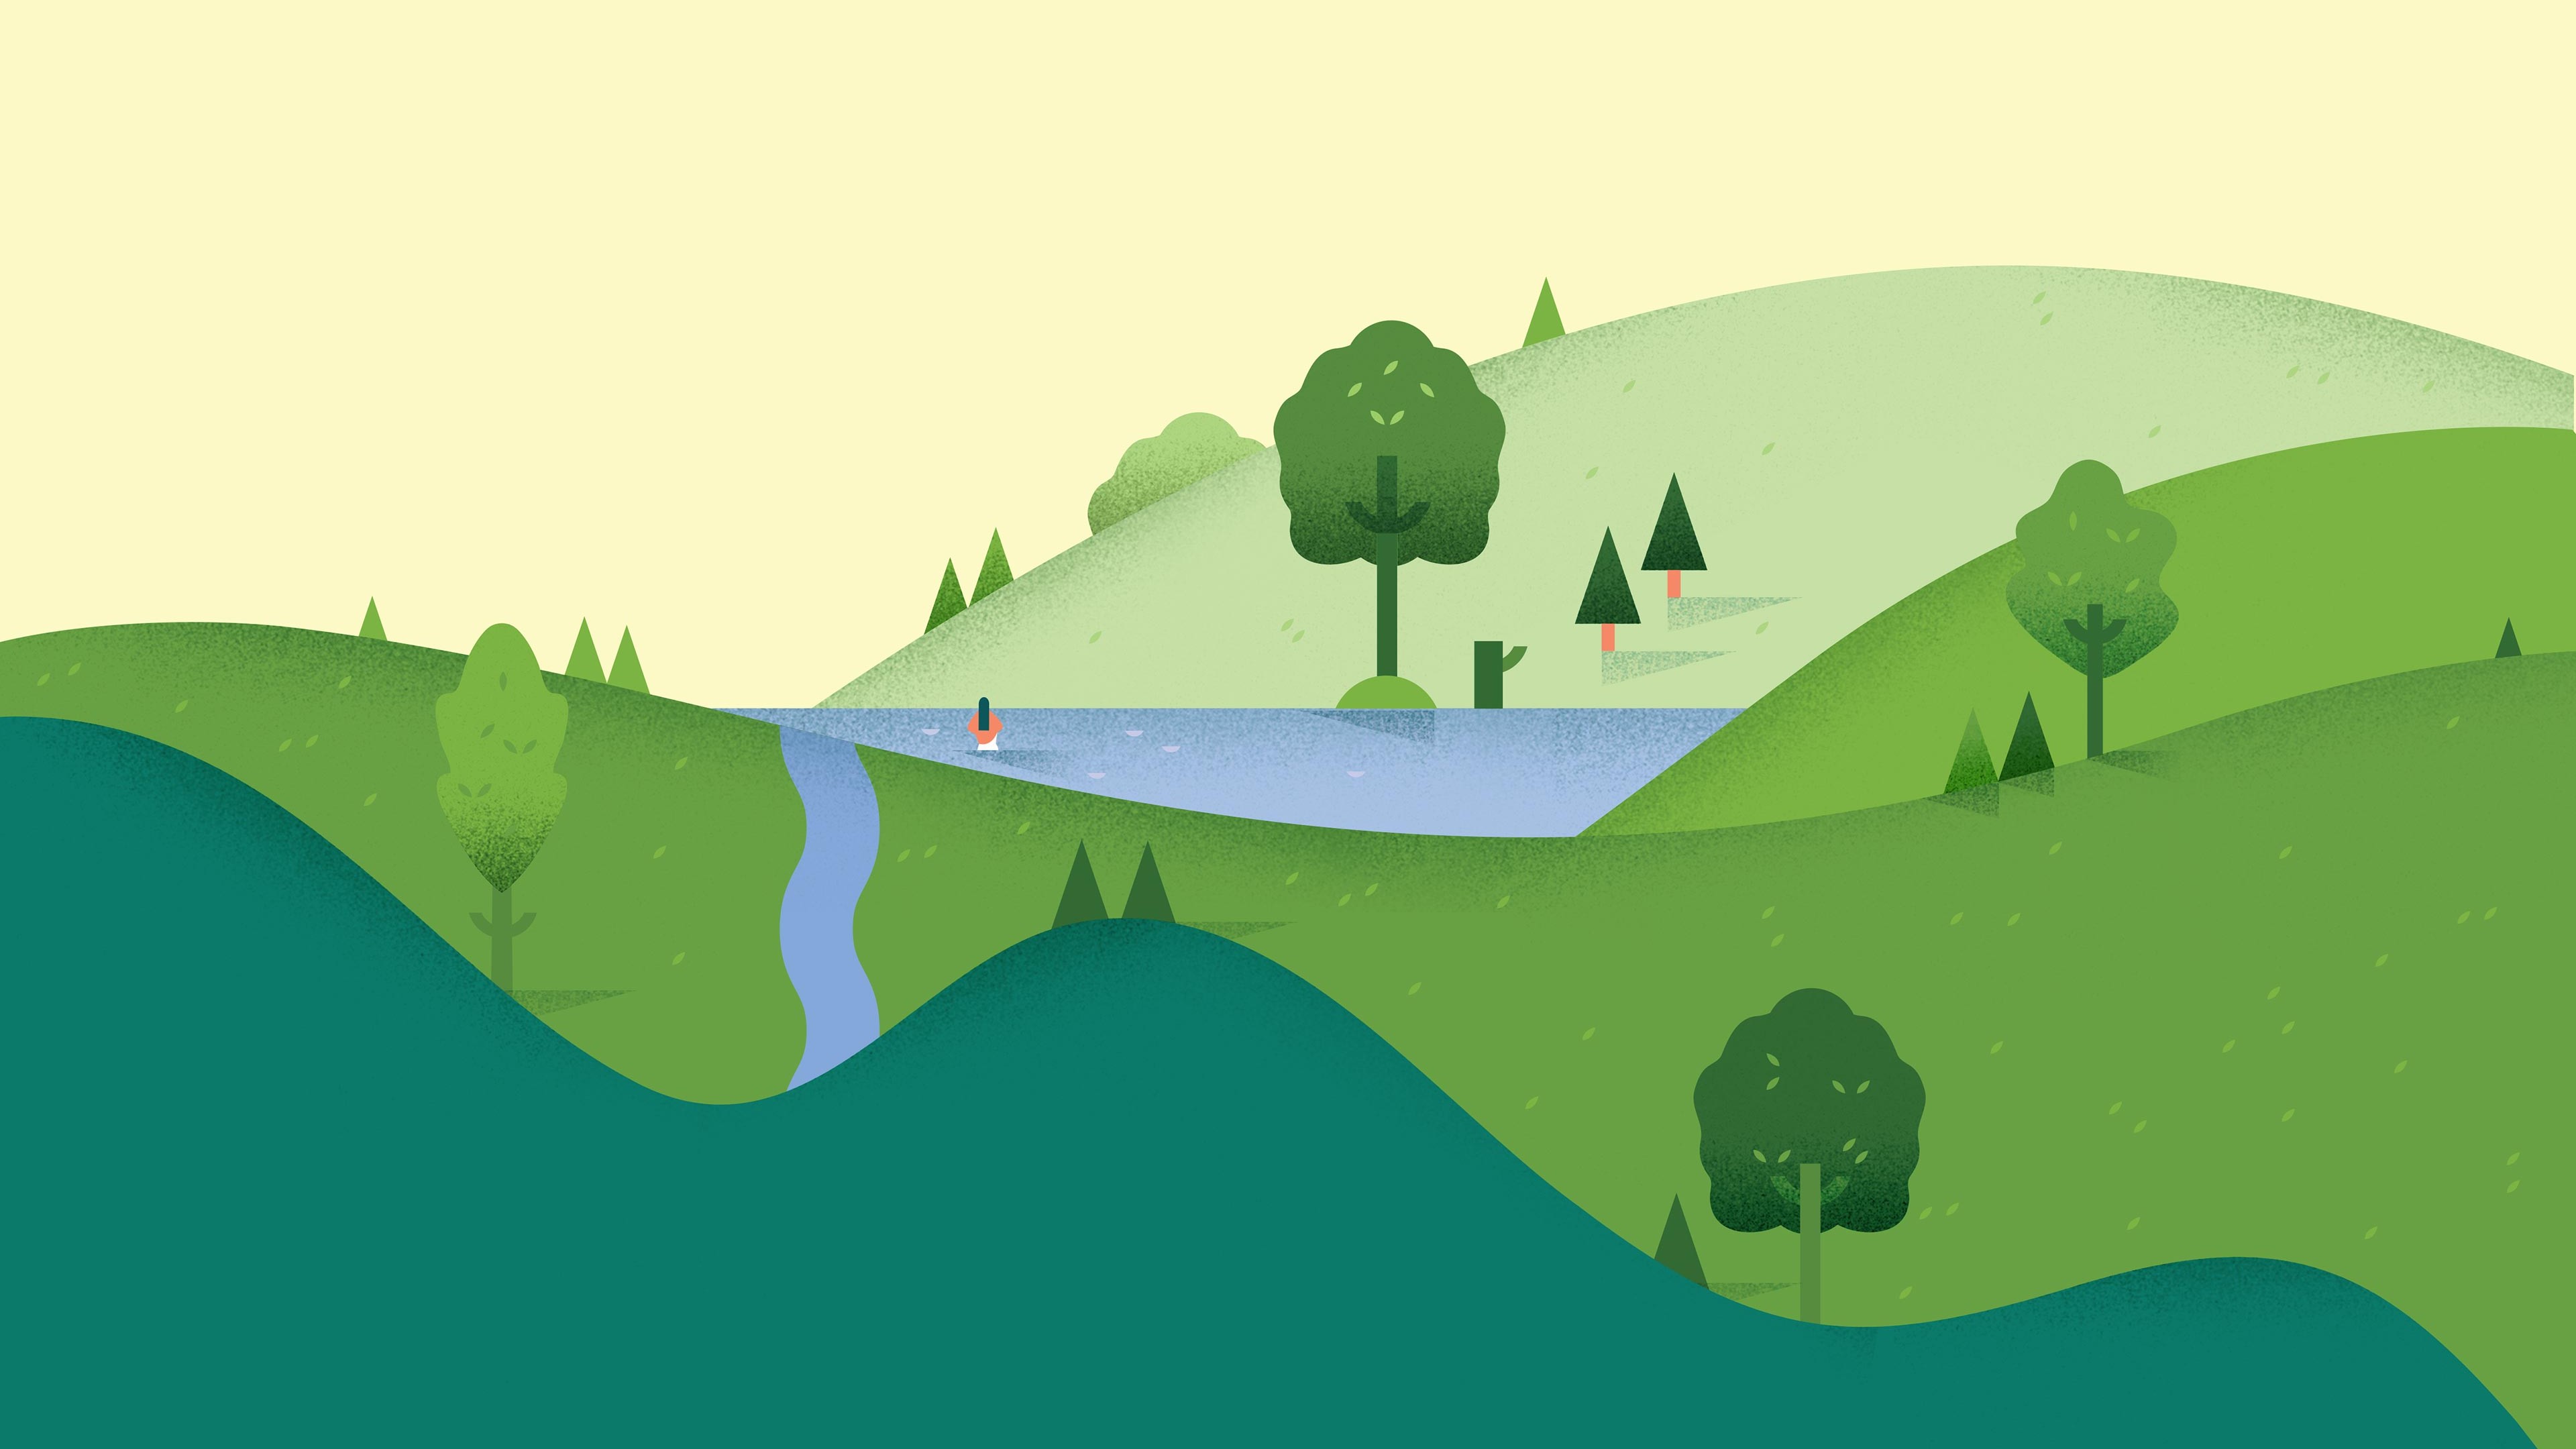 Fondos de pantalla Illustration Lake with hills